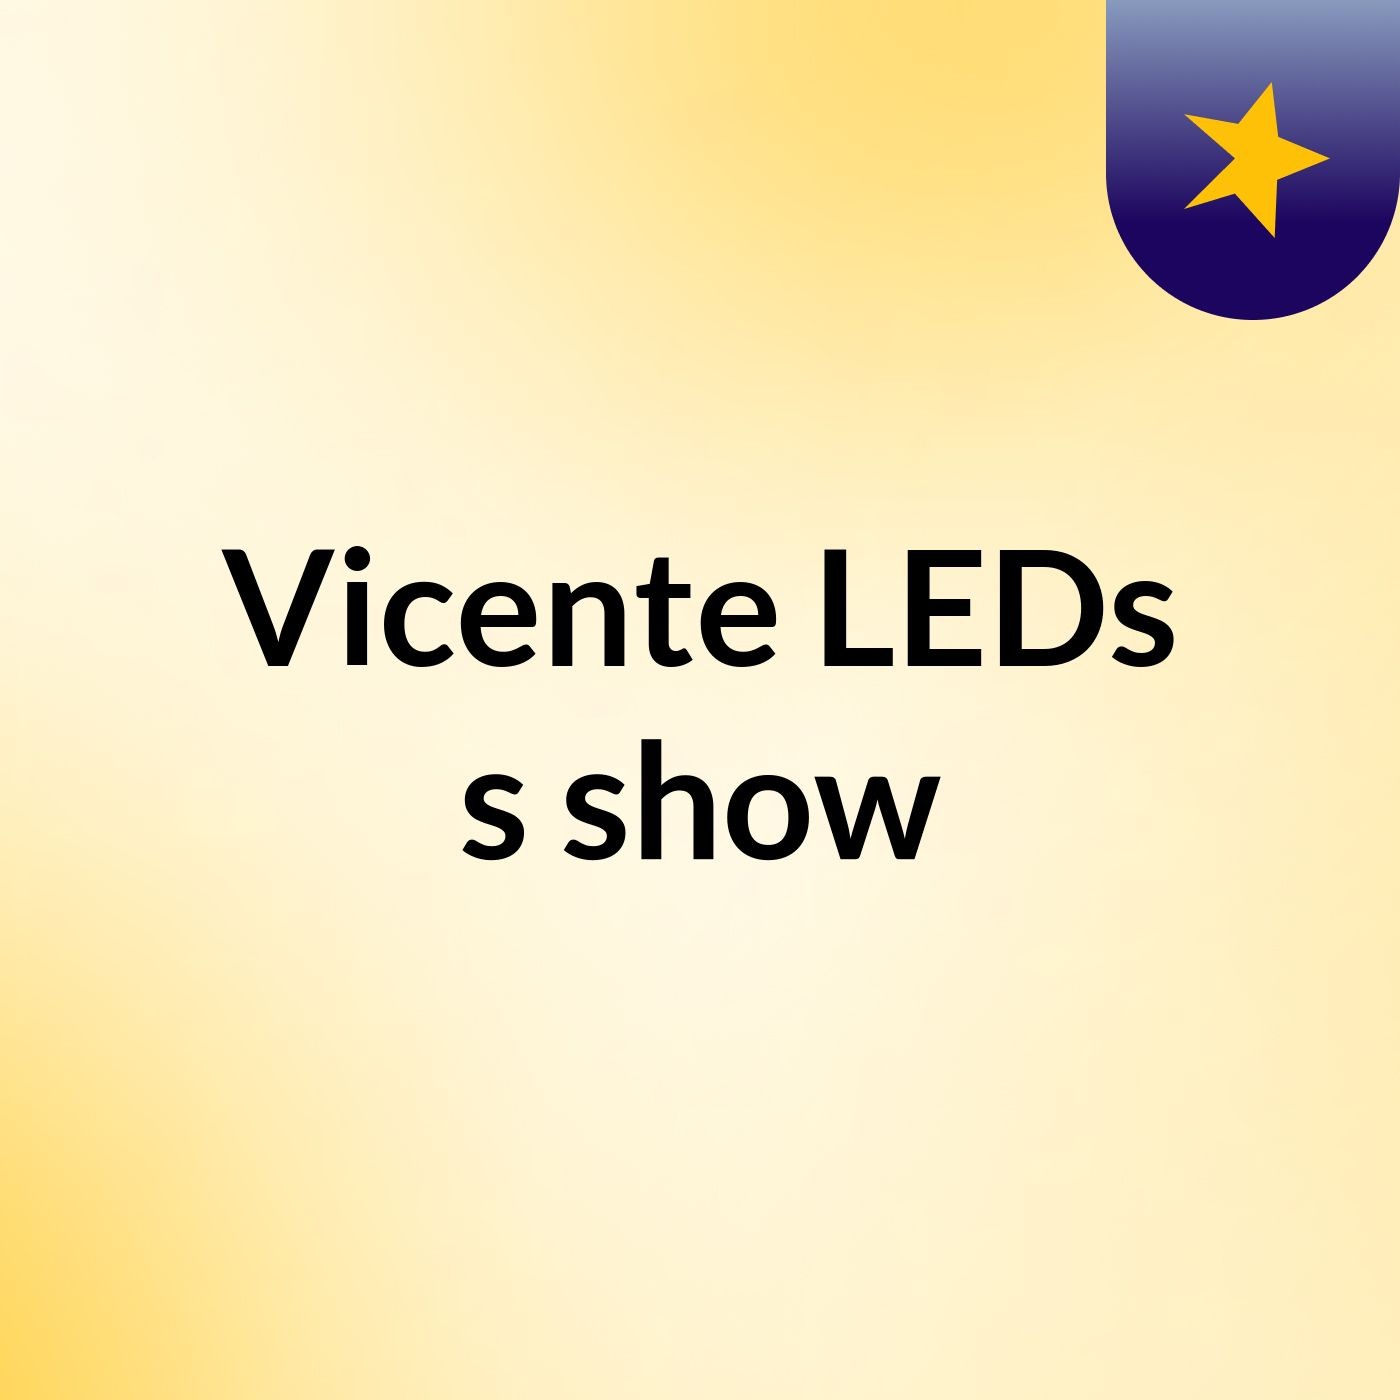 Vicente LEDs's show